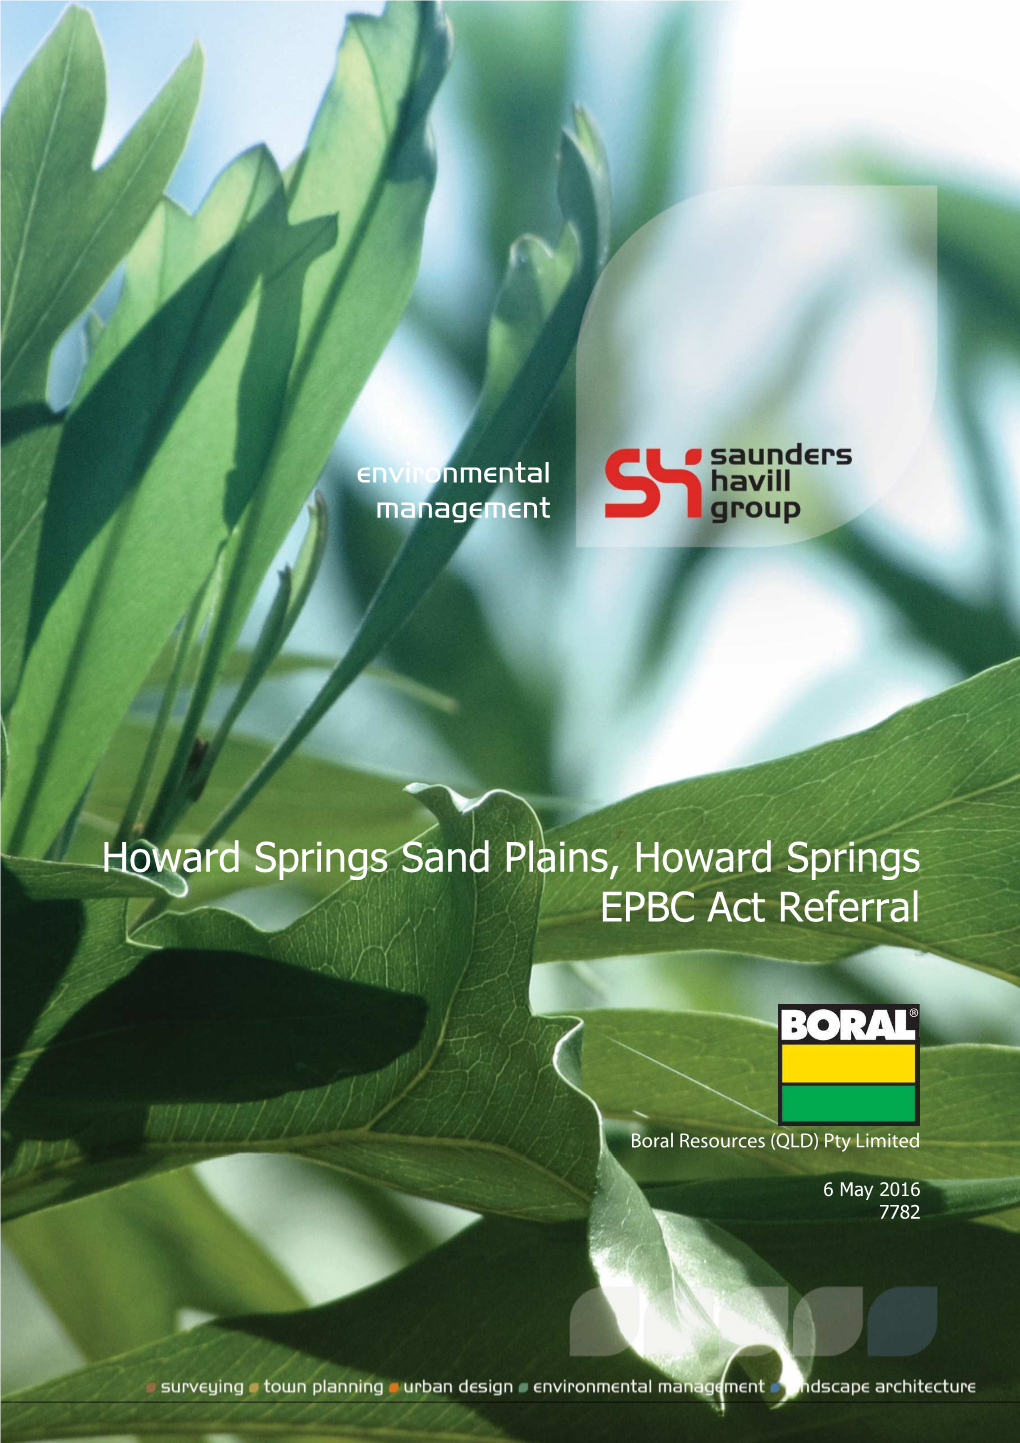 Howard Springs Sand Plains, Howard Springs EPBC Act Referral